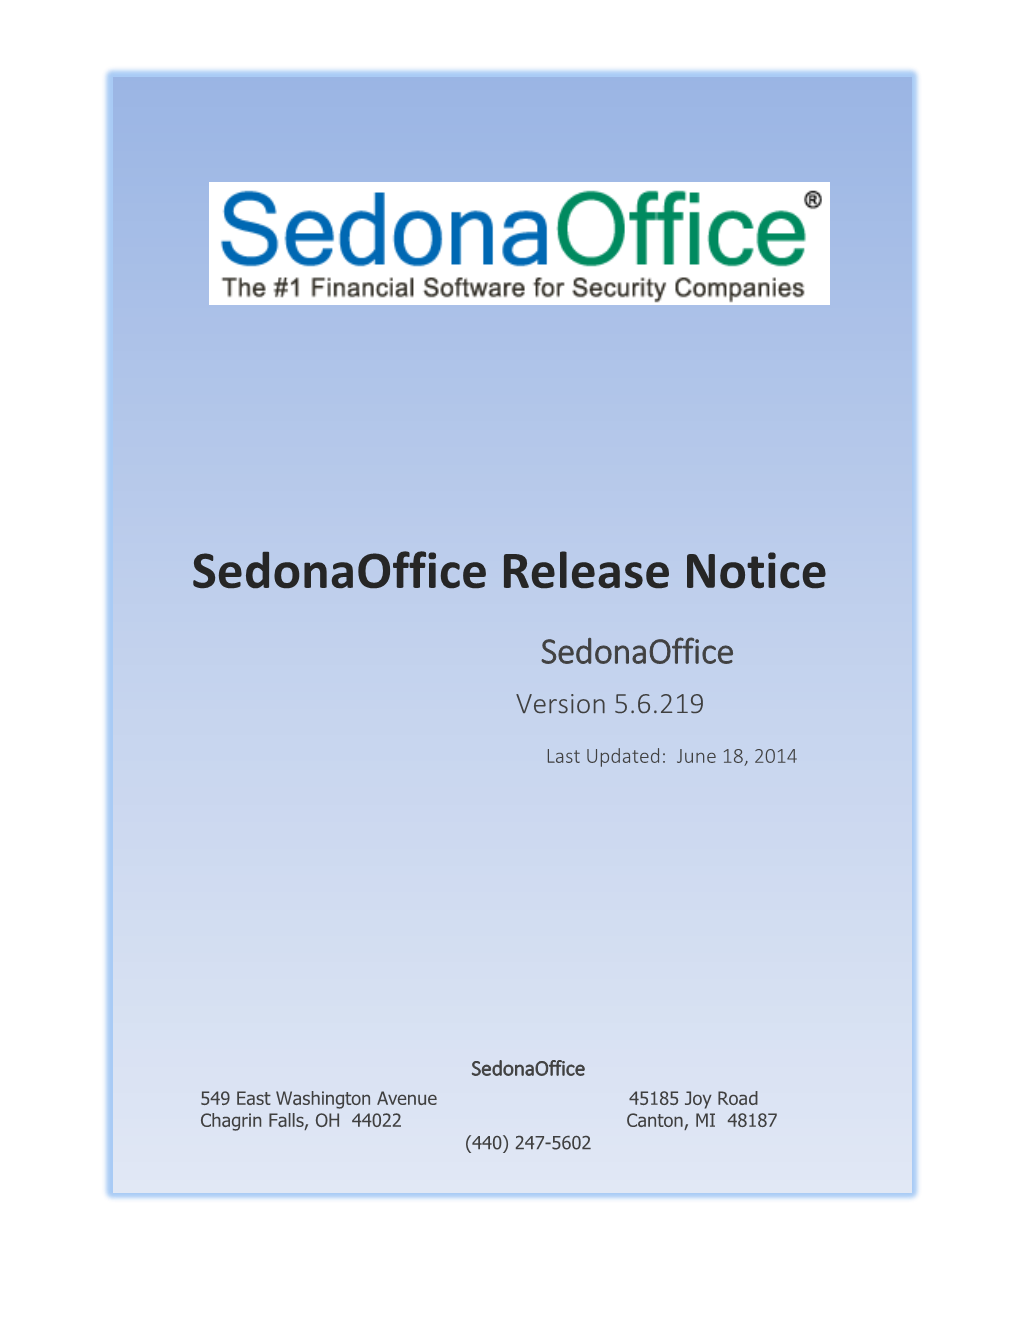 Sedonaoffice Release Notice for Version 5.6.219